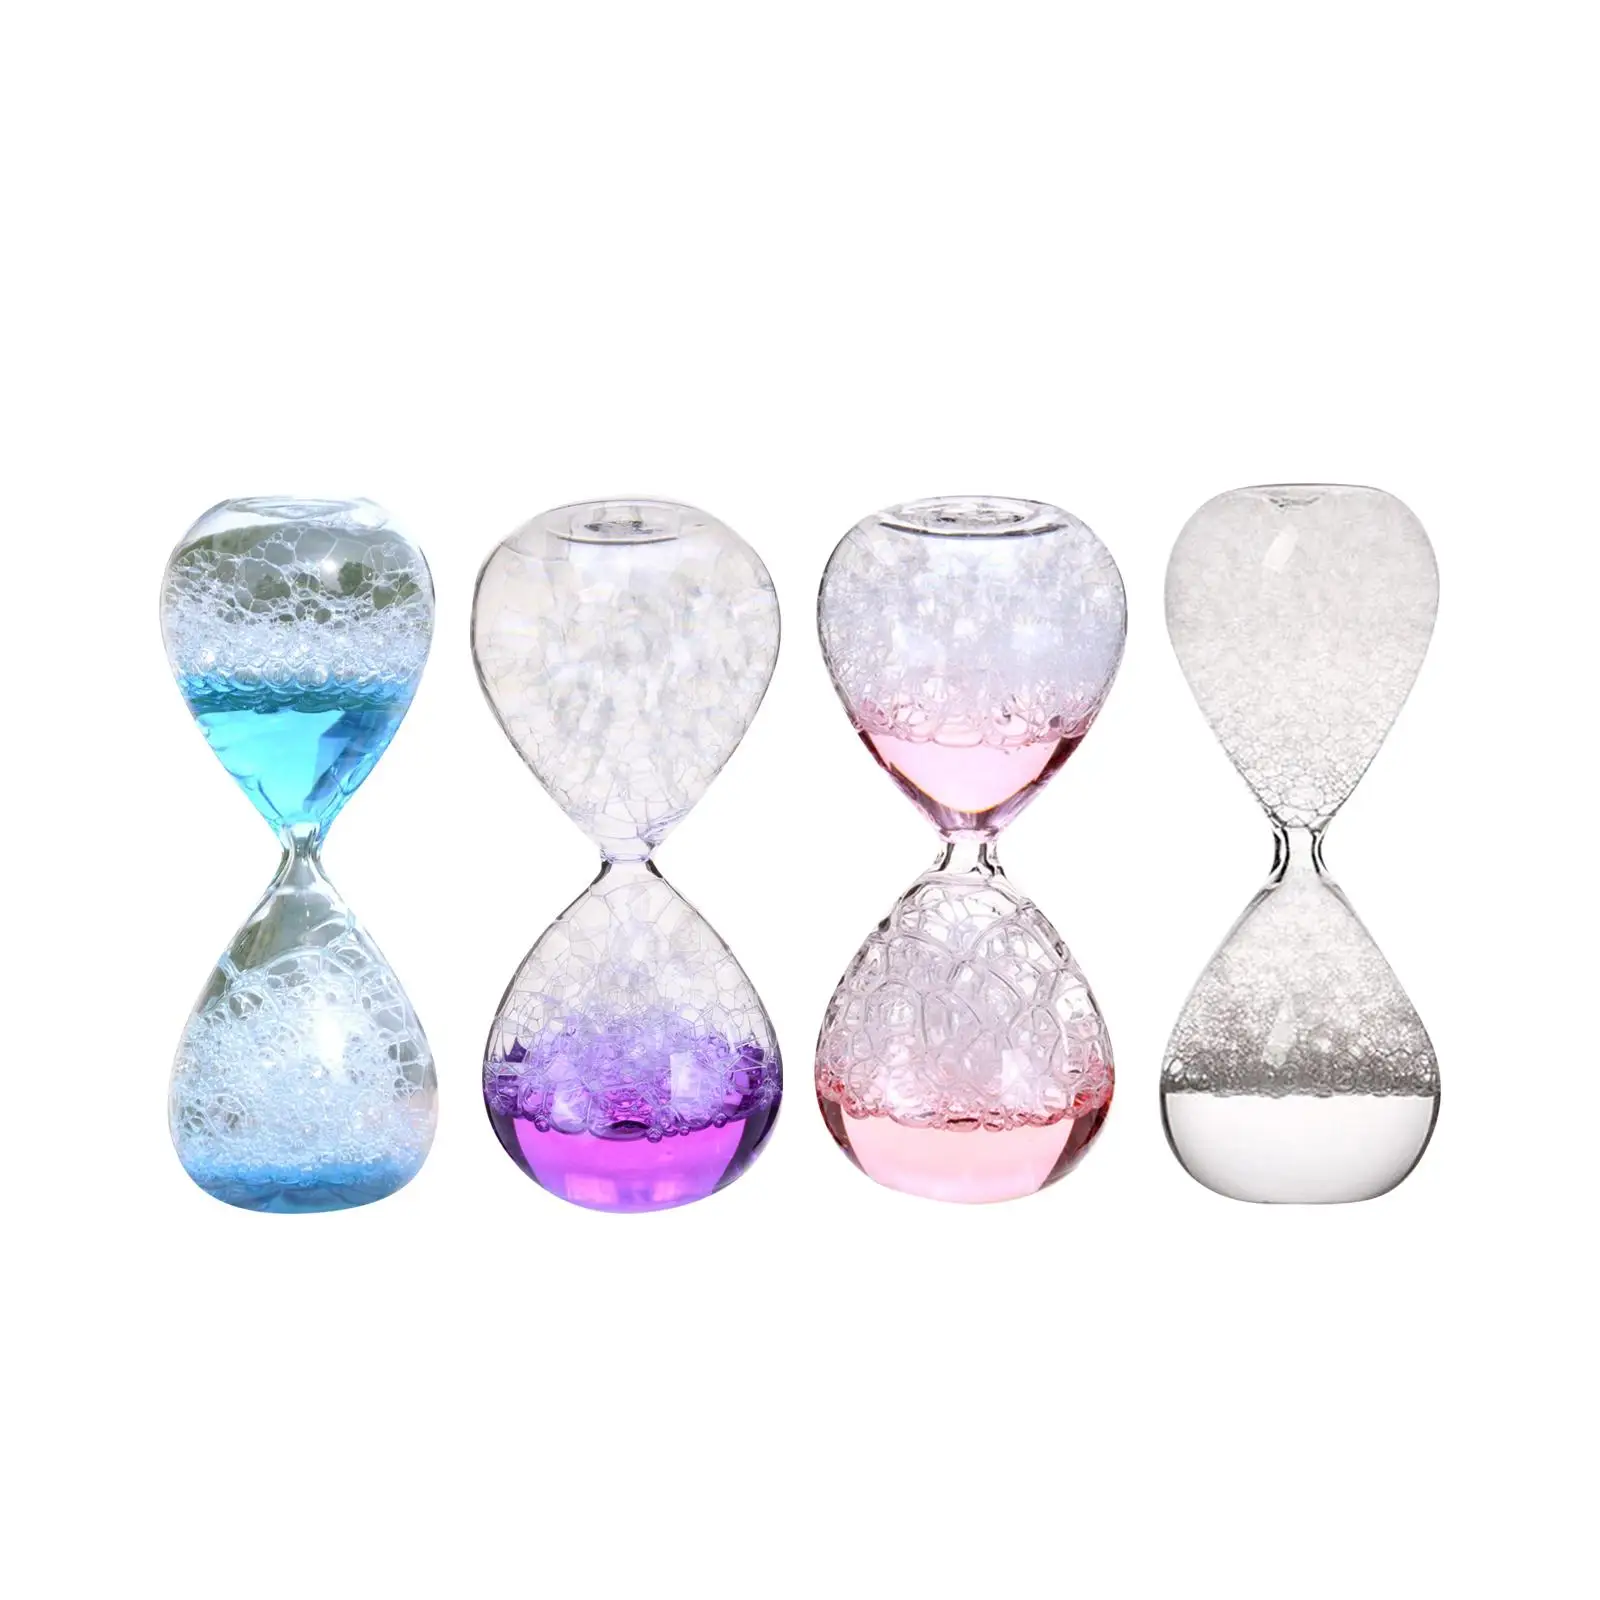 Dream Bubble Hourglass Sand Timer Durable Handmade Glass Liquid Birthday Gifts for Lover Desktop Kids Office Teaching